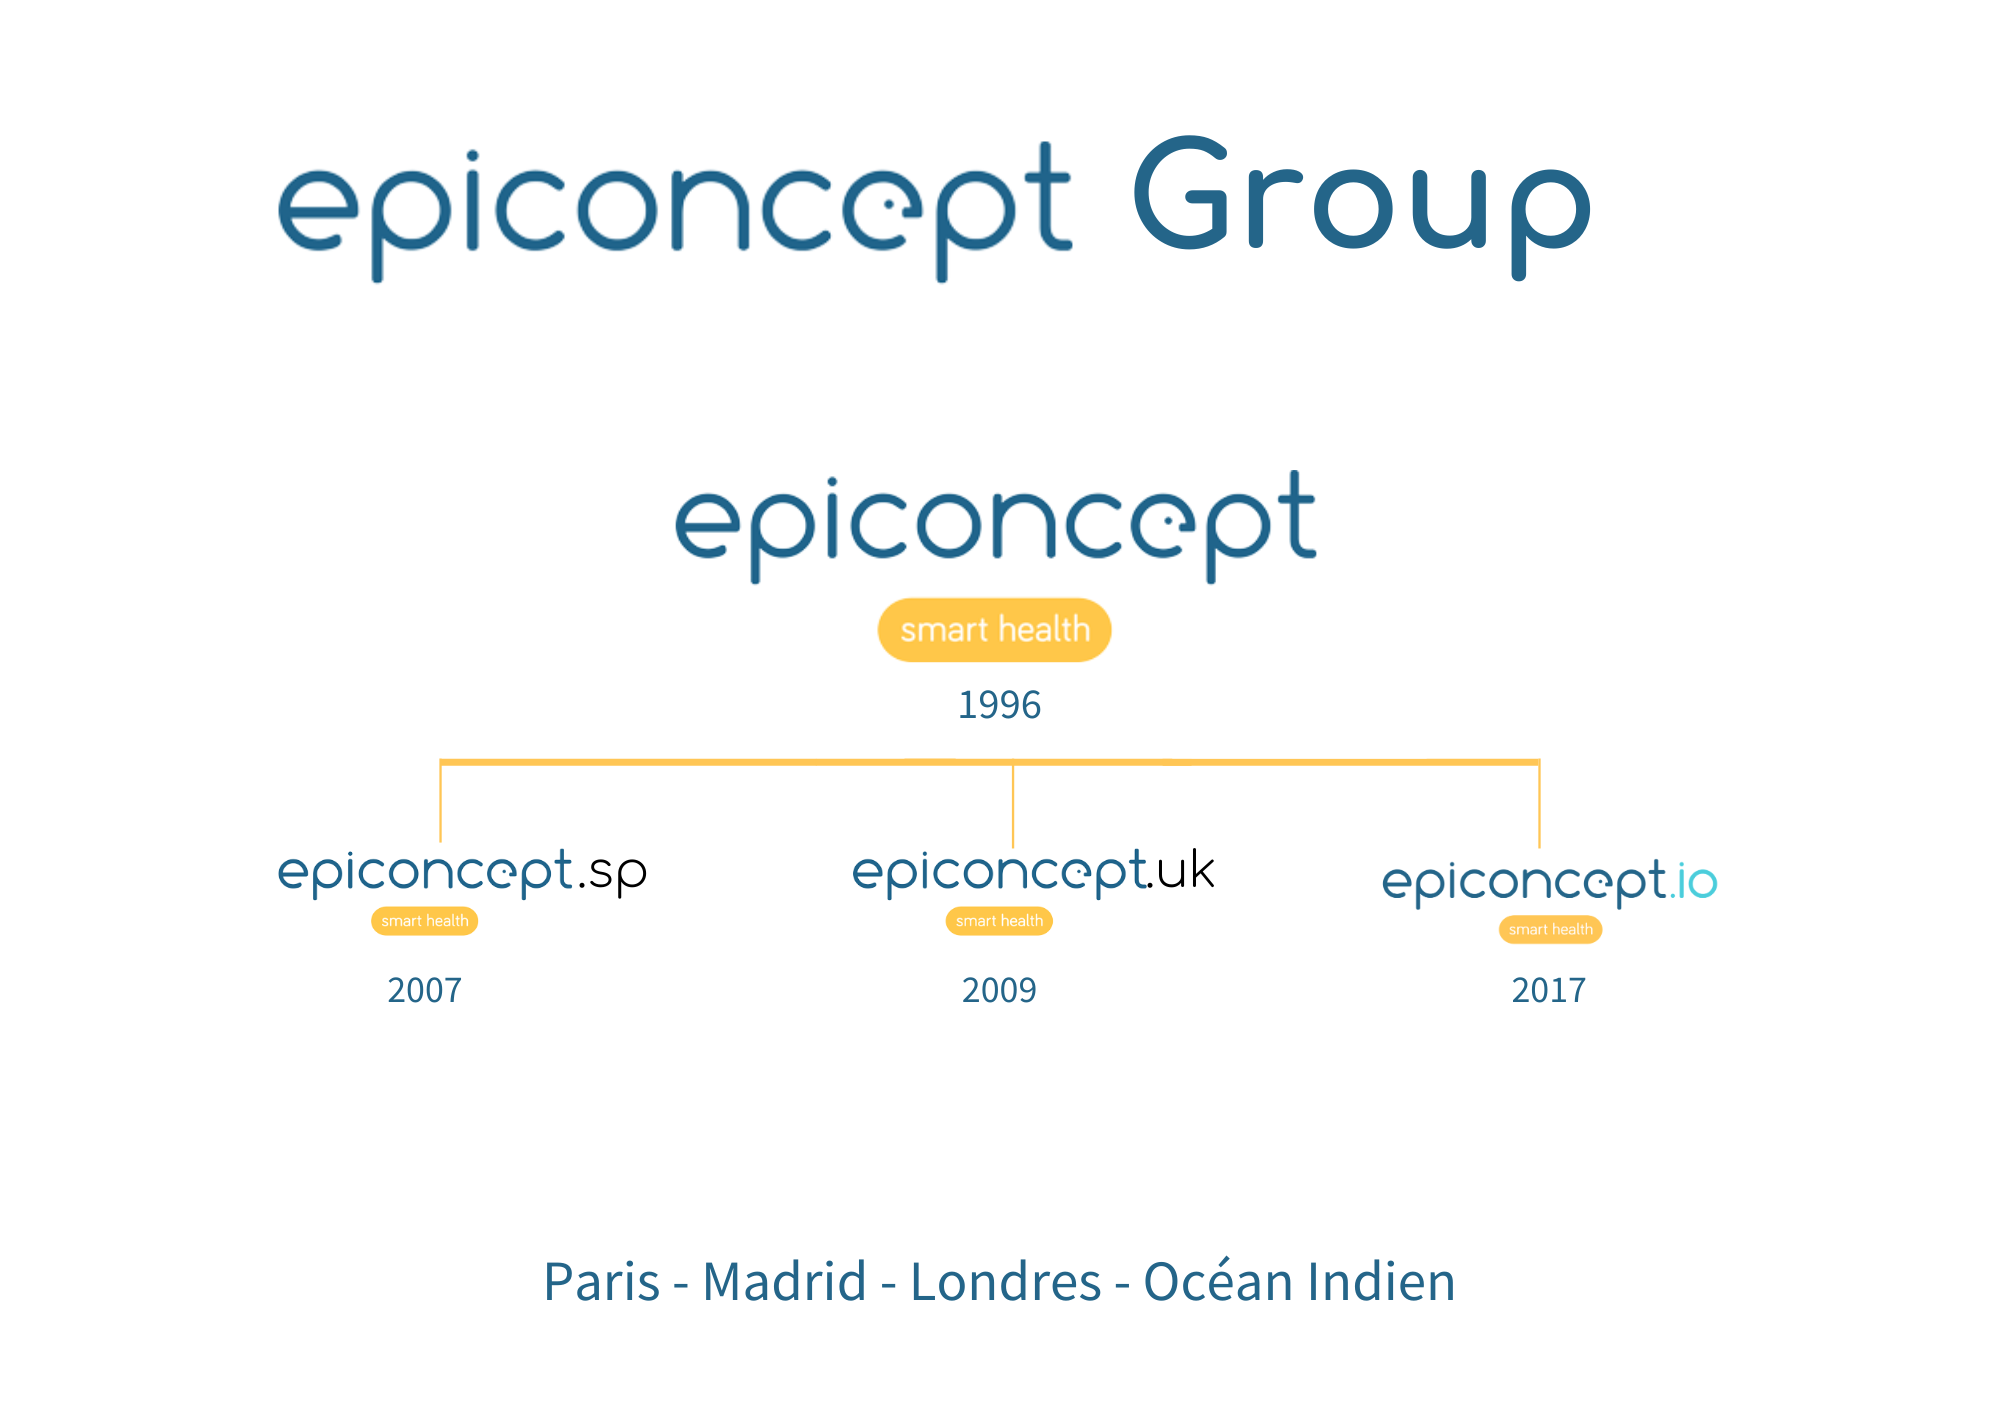 Epiconcept Group